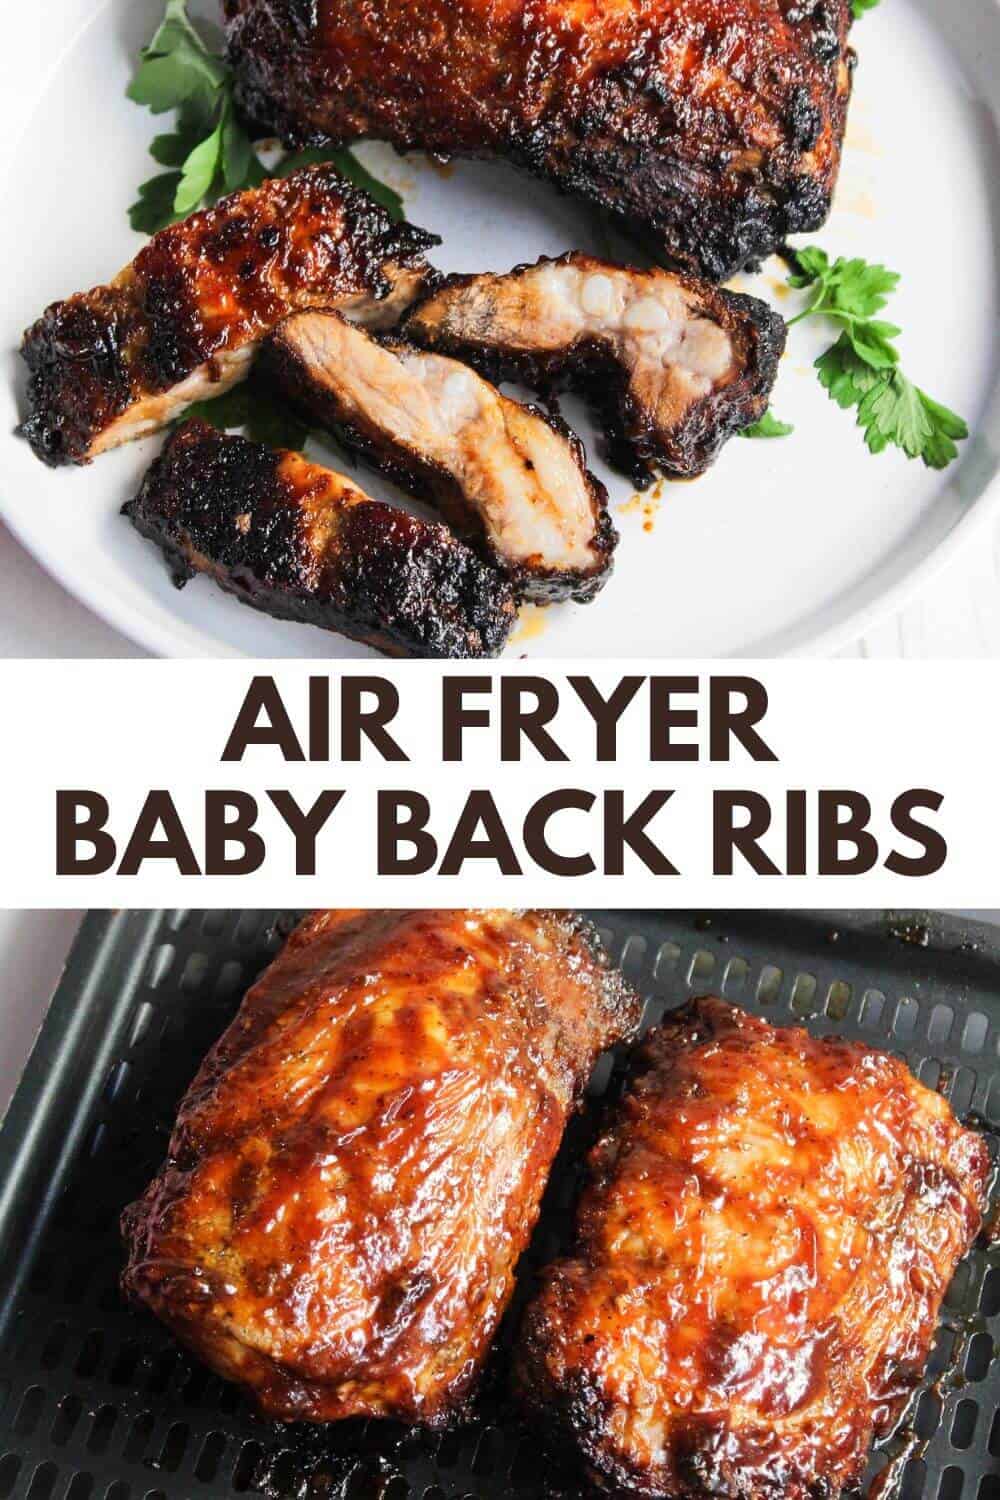 Air fryer baby back ribs.